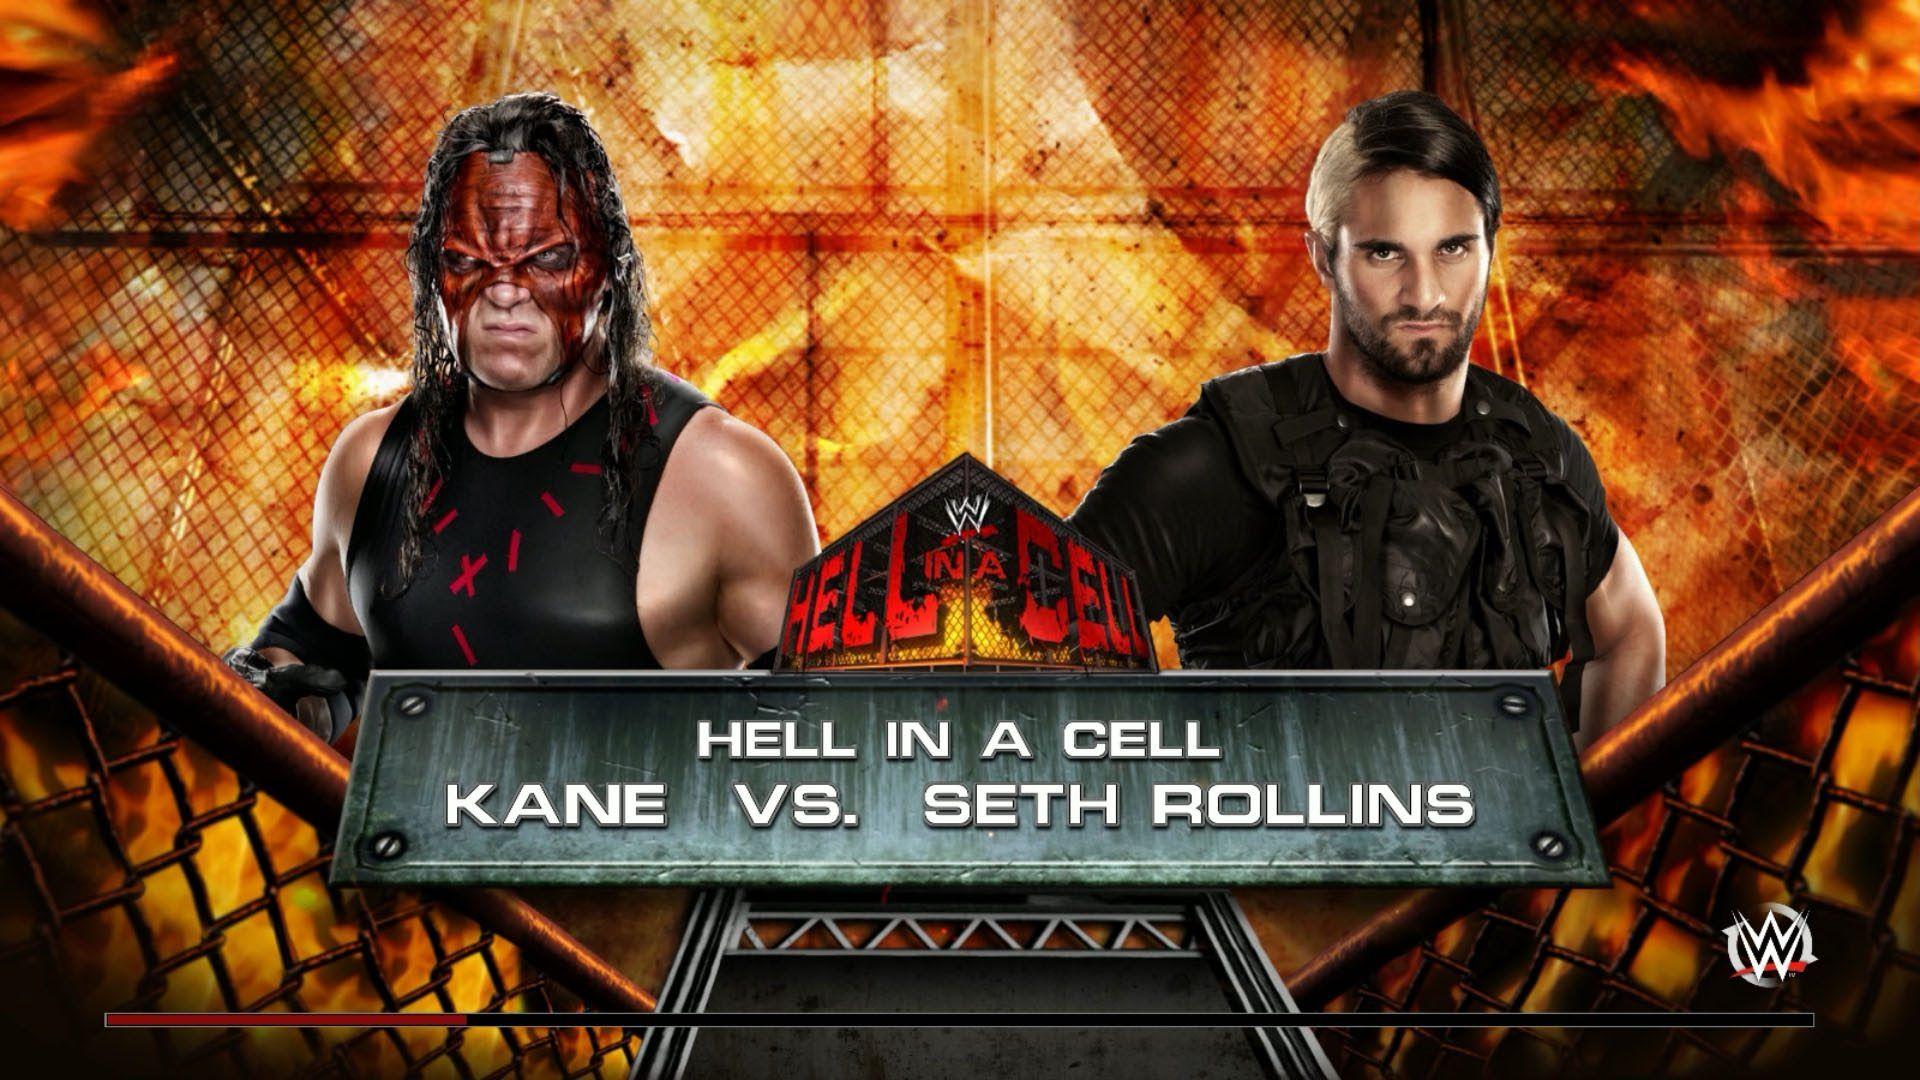 WWE 2k15. HELL IN A CELL. DEMON KANE vs SETH ROLLINS